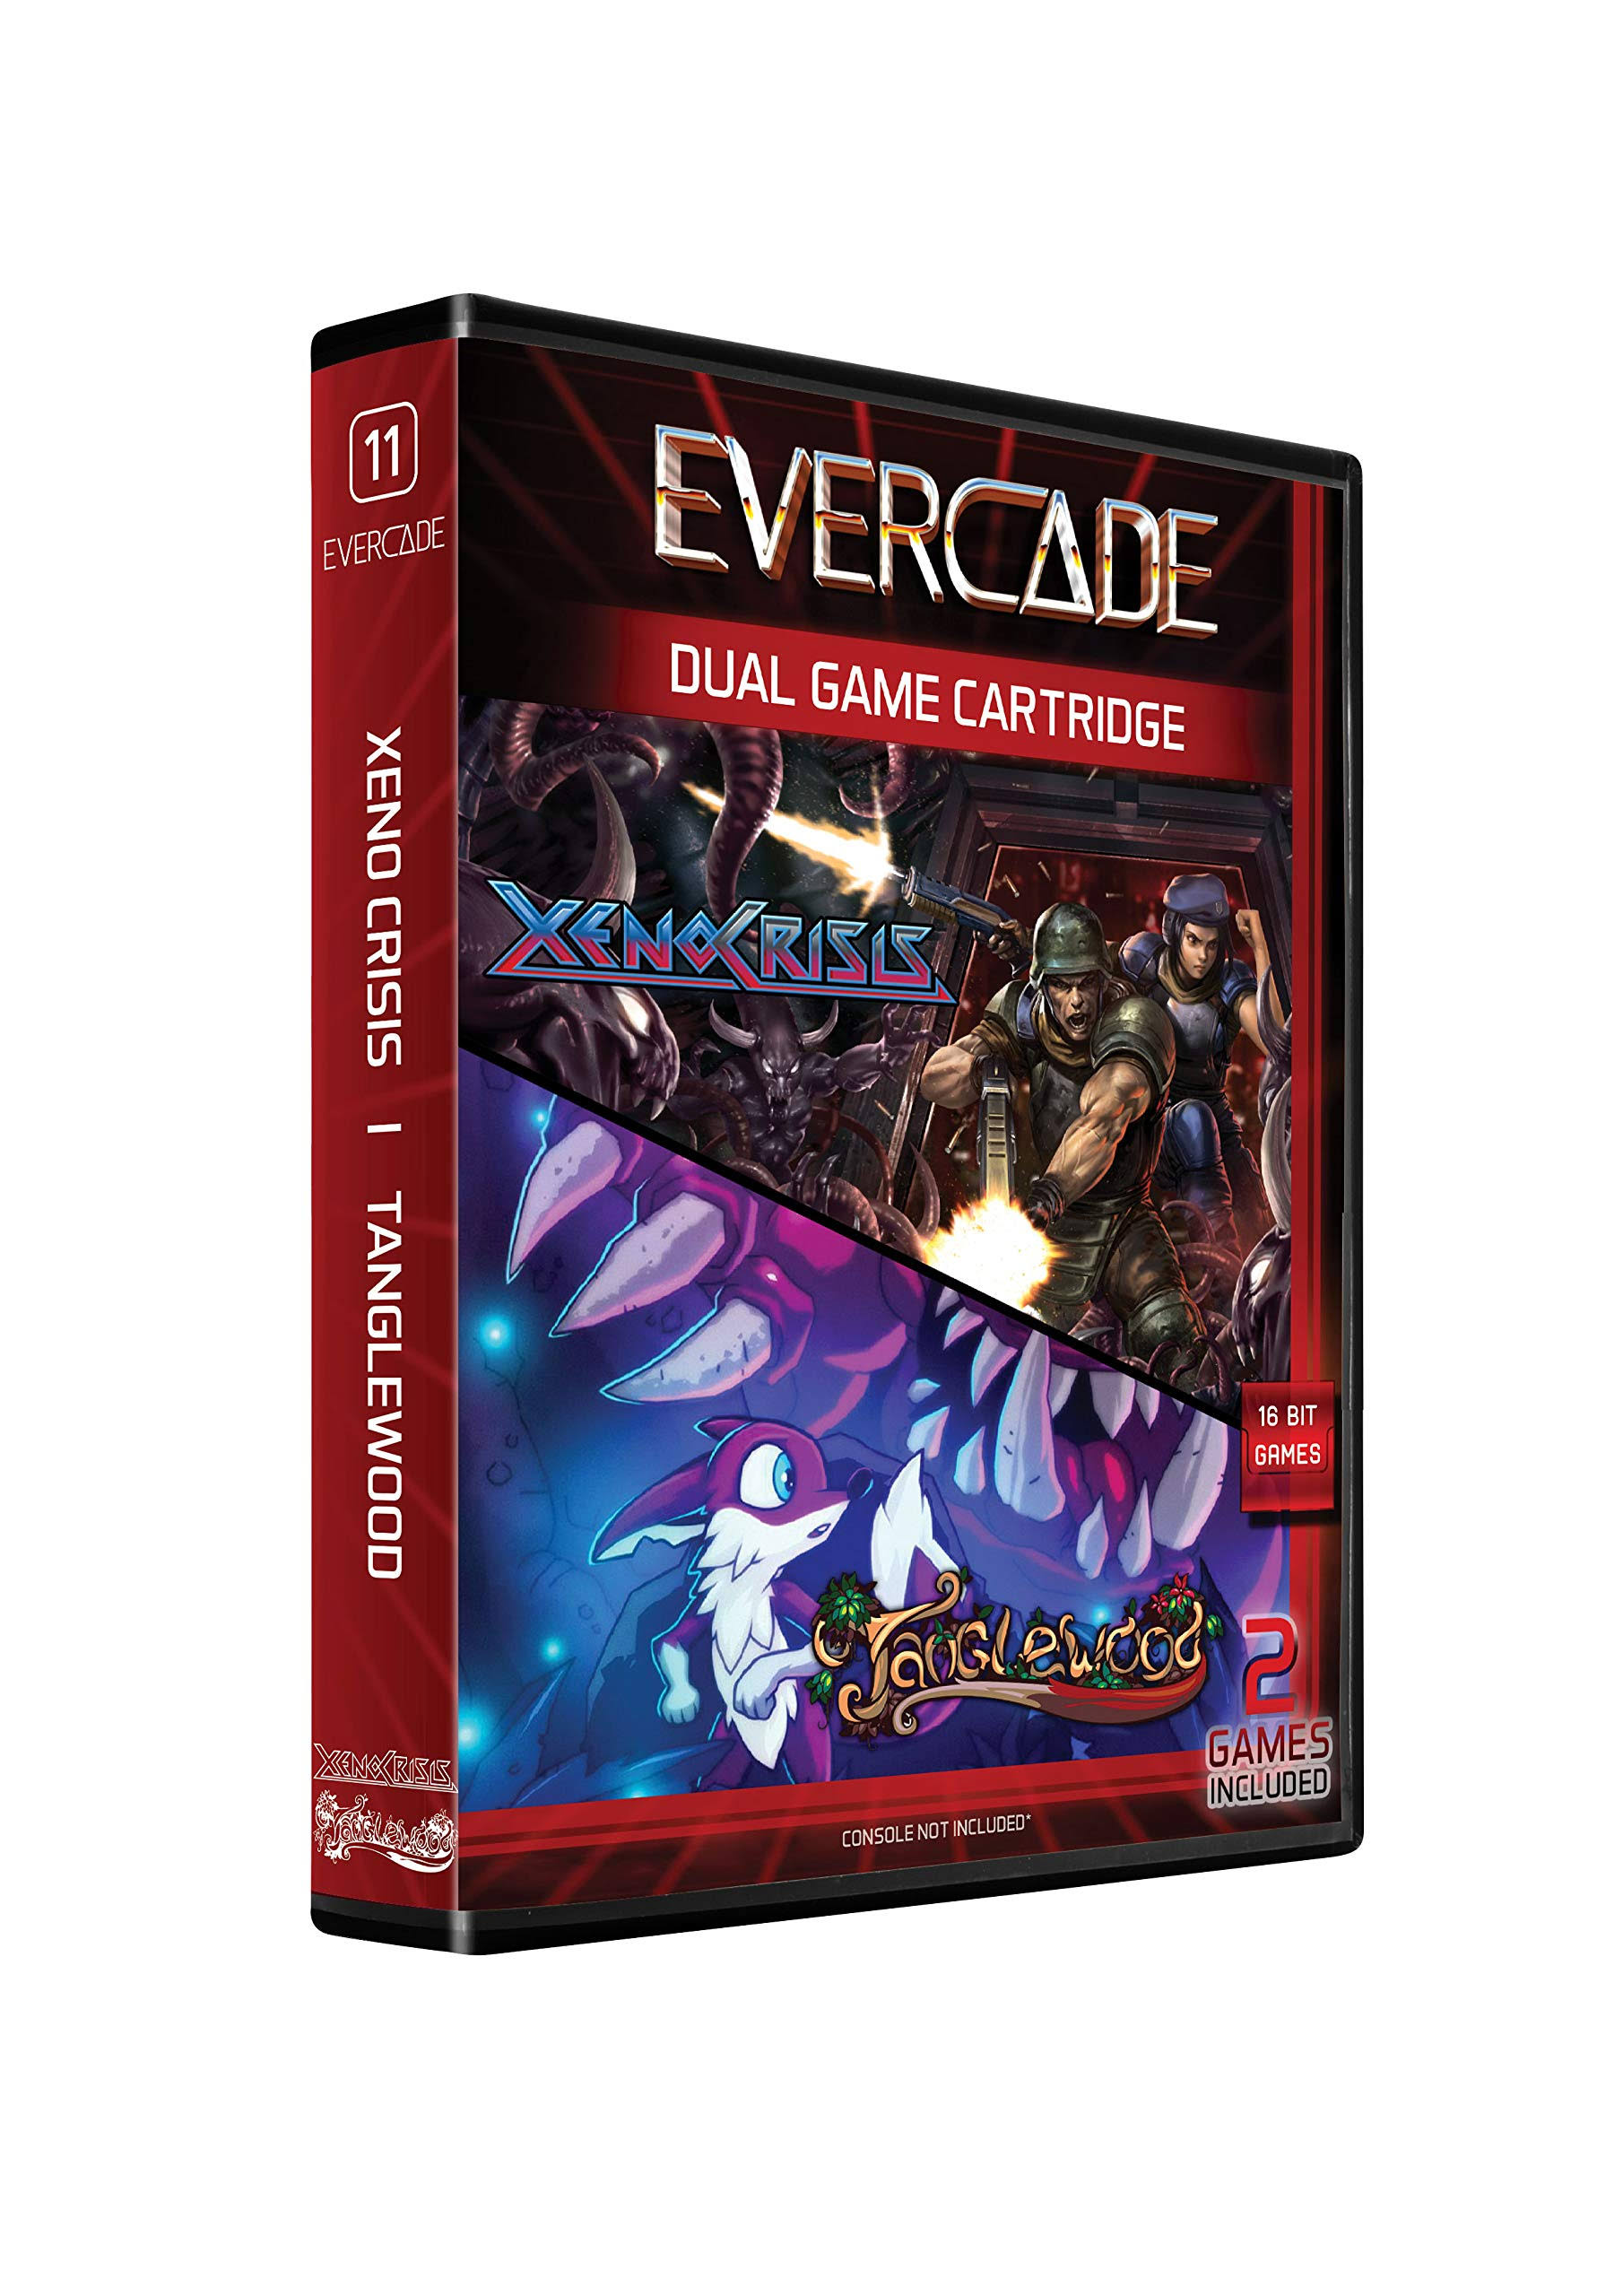 Evercade Dual Game Cartridge (Xeno Crisis/Tanglewood)